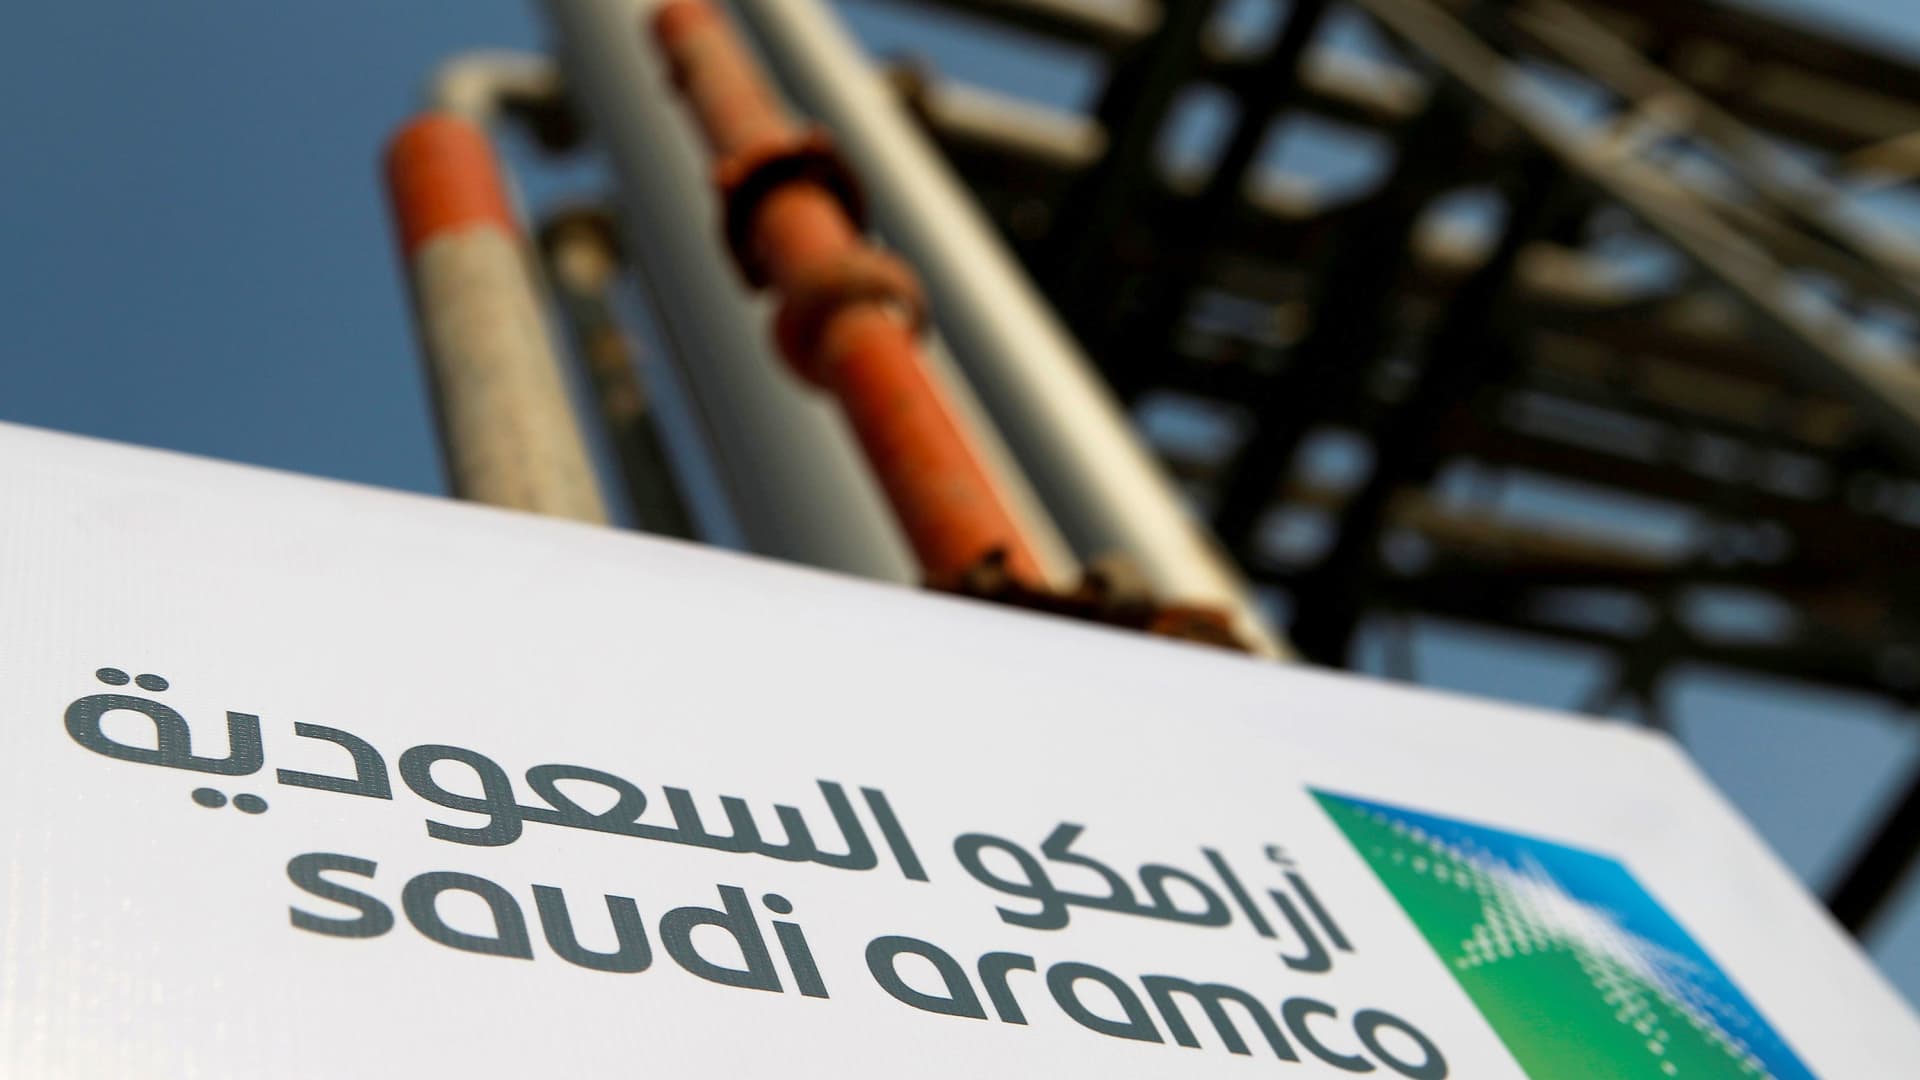 Oil giant Saudi Aramco's profit slides 23% in third quarter on lower crude prices, volumes